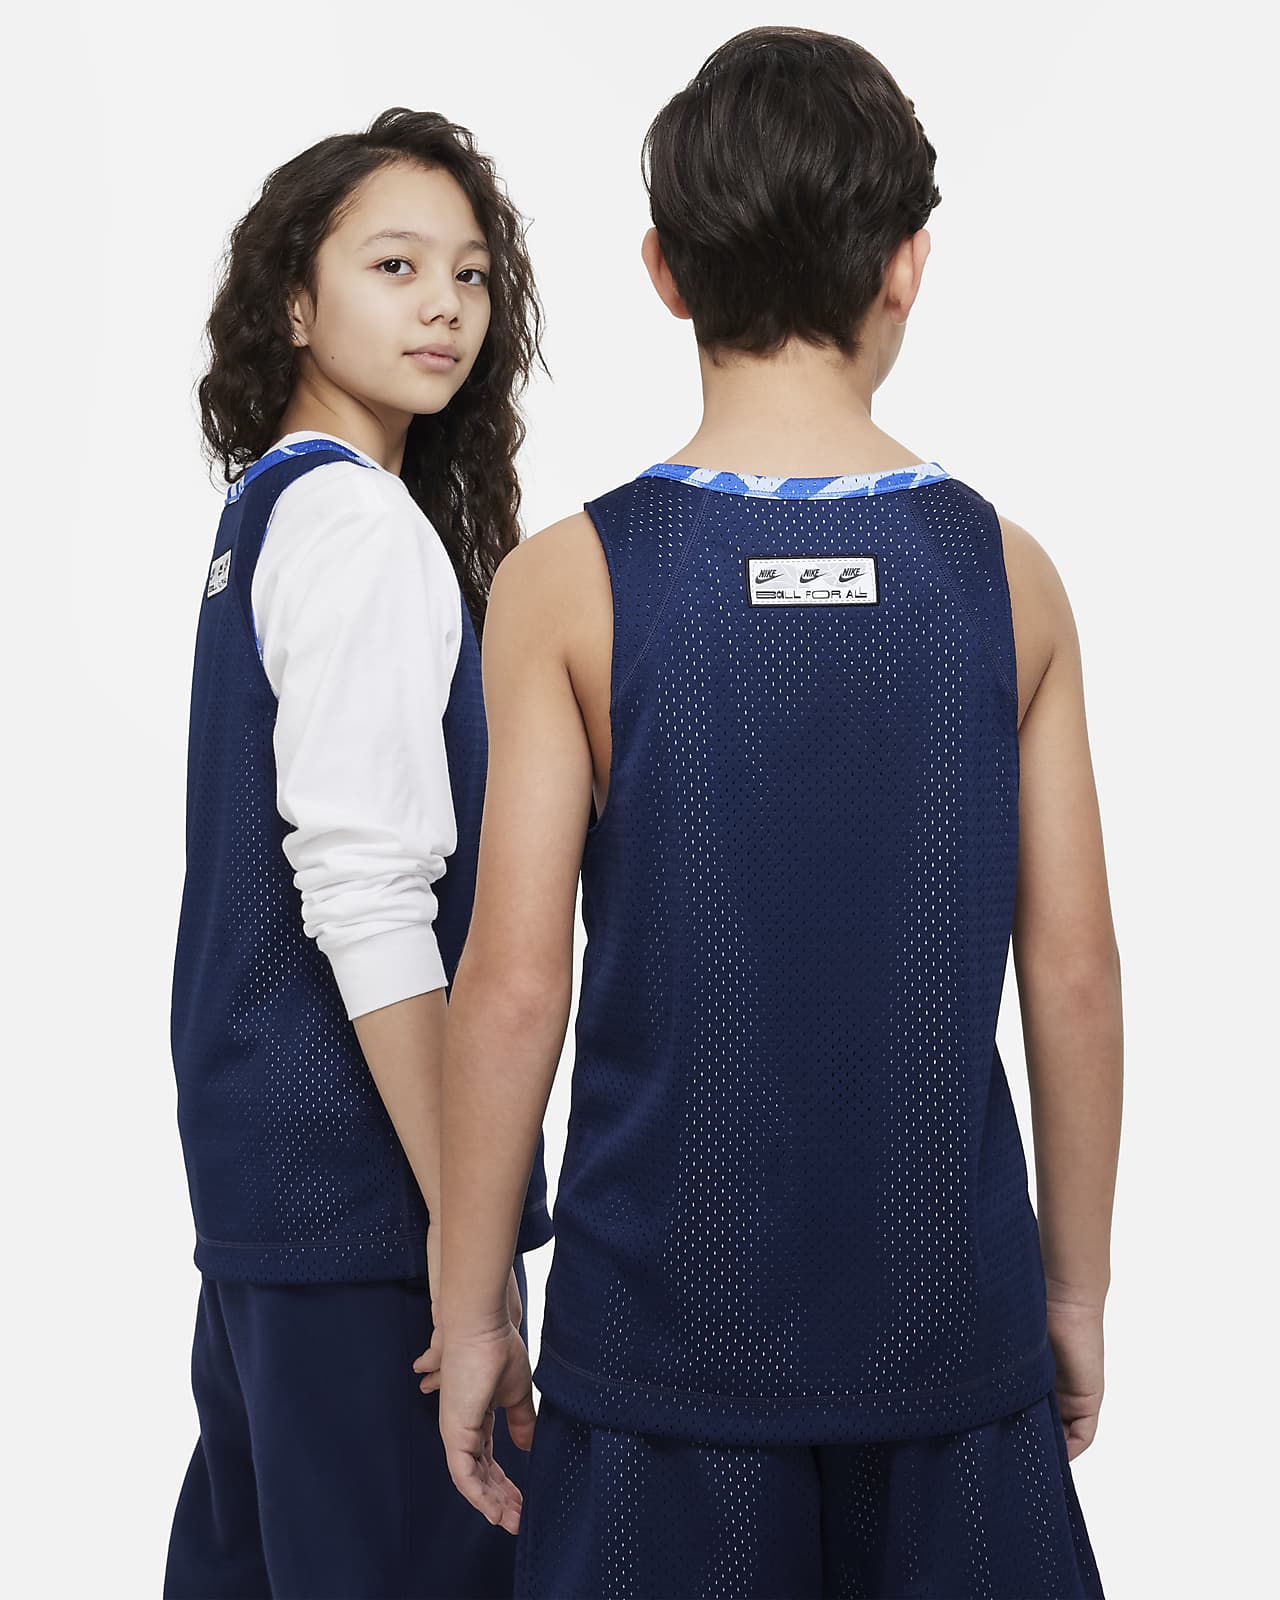 Nike Culture of Basketball Older Kids' Reversible Basketball